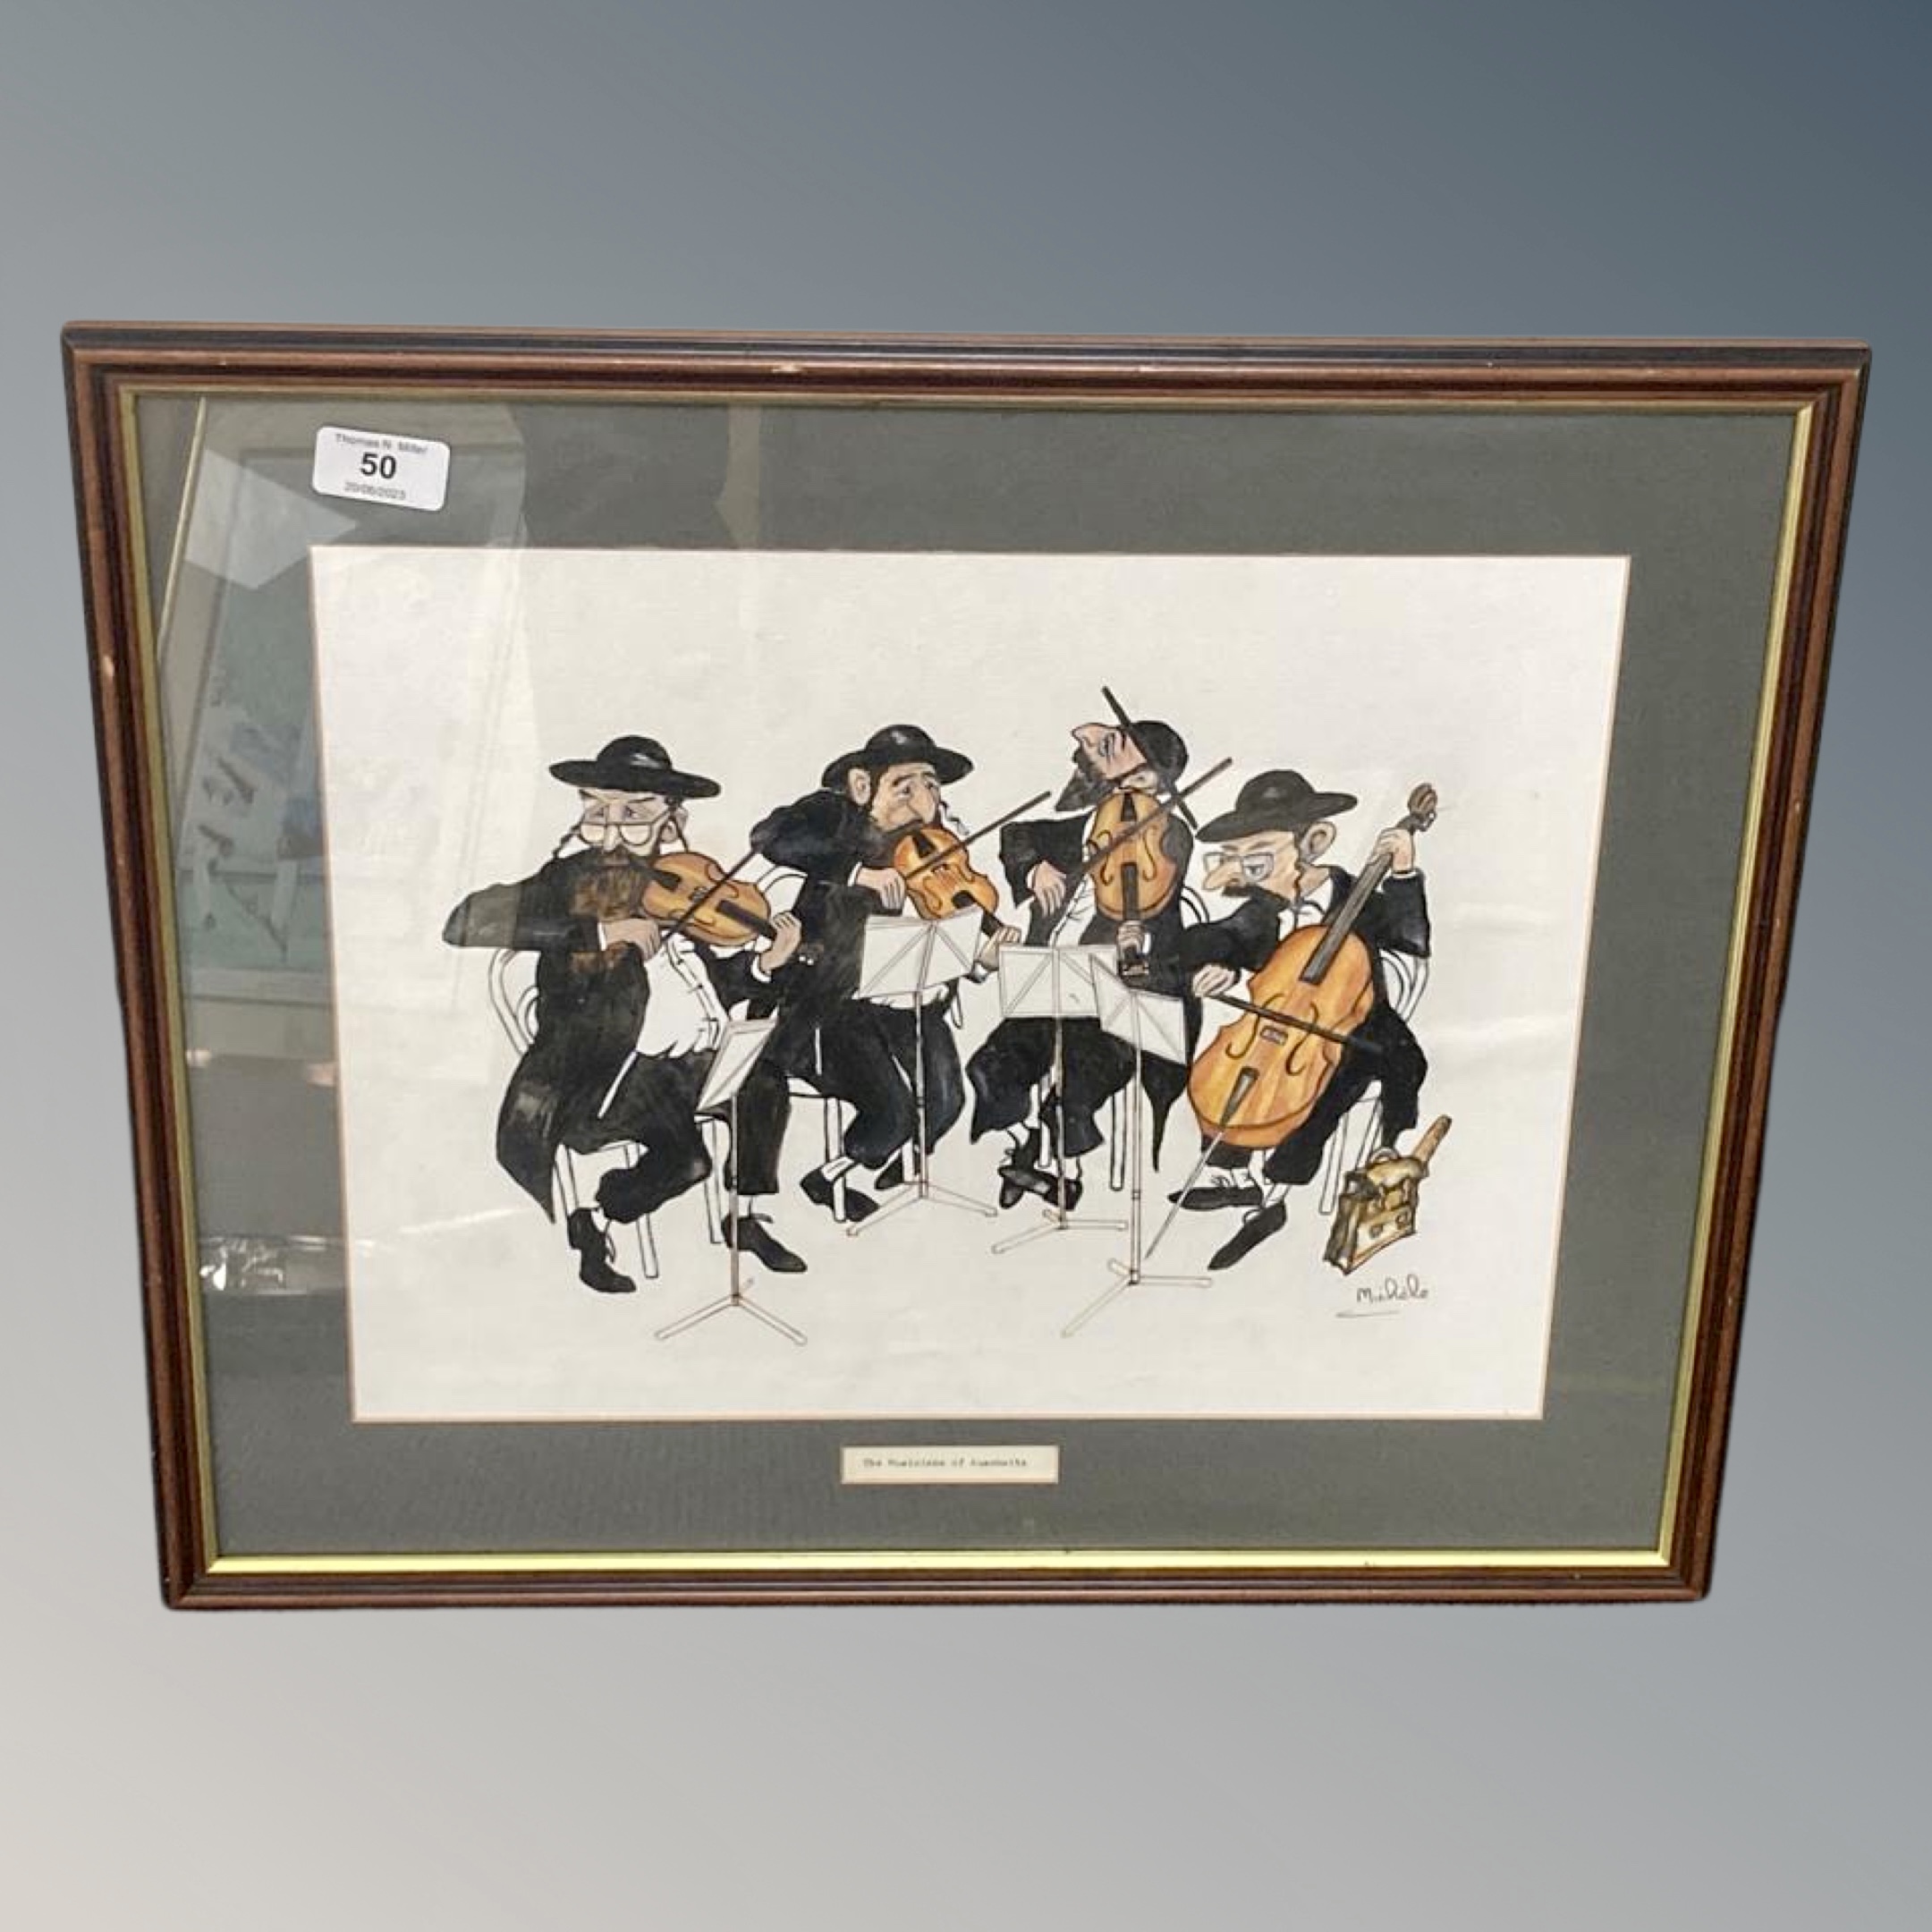 Michele : The Musicians of Auschwitz, watercolour, 39 cm x 30 cm, framed.